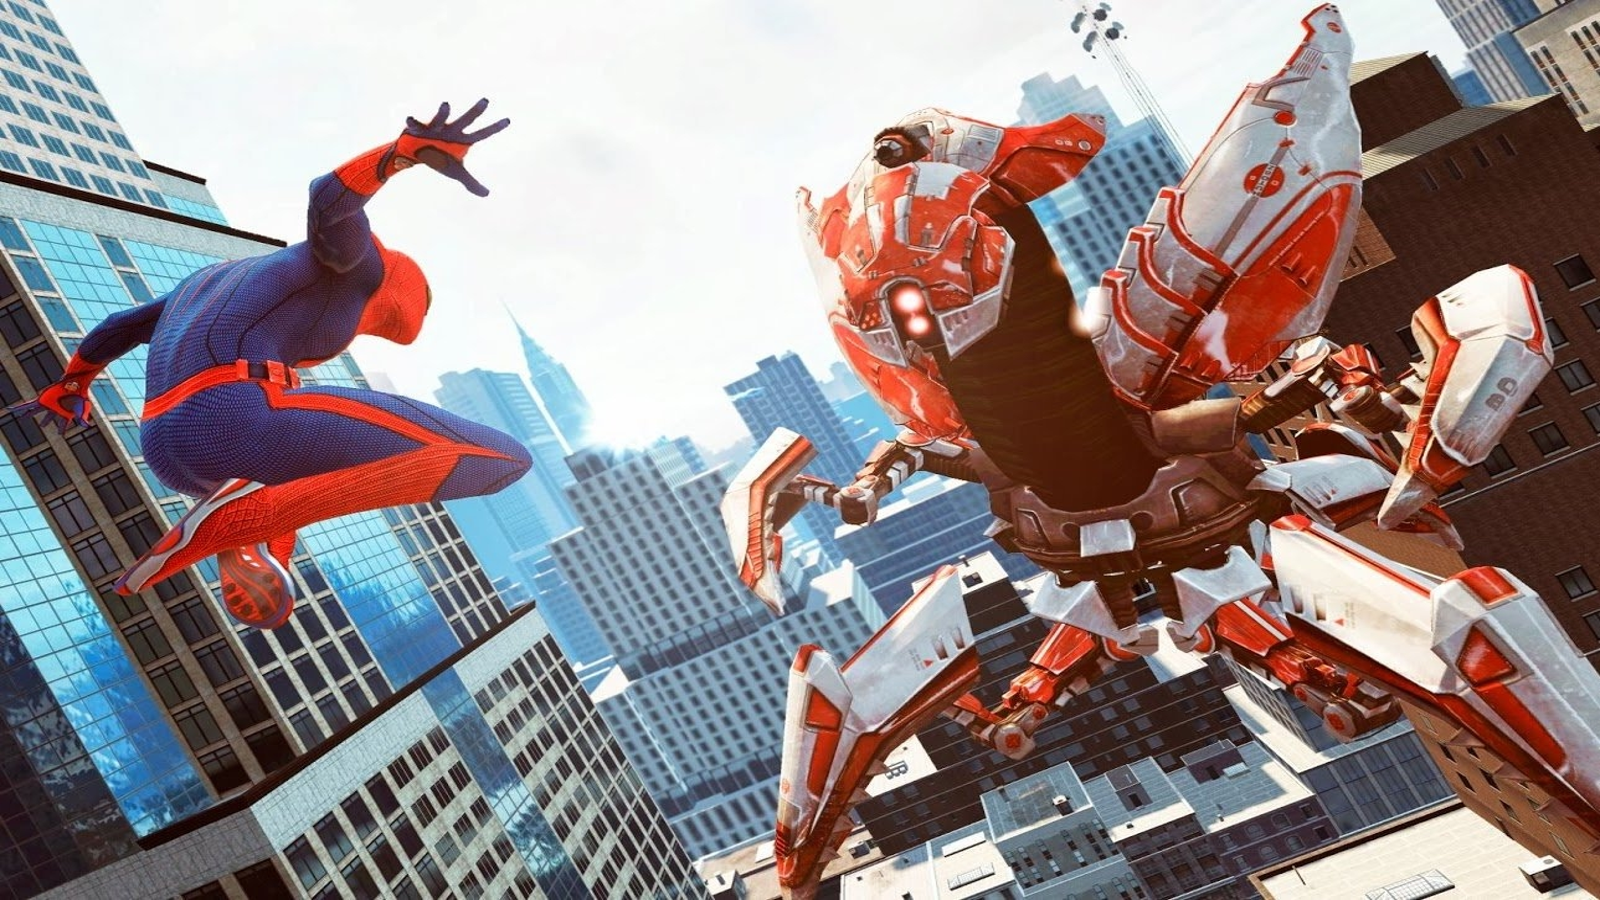 Amazing SpiderMan 2 GAMEPLAY [1080p] [Xbox 360]